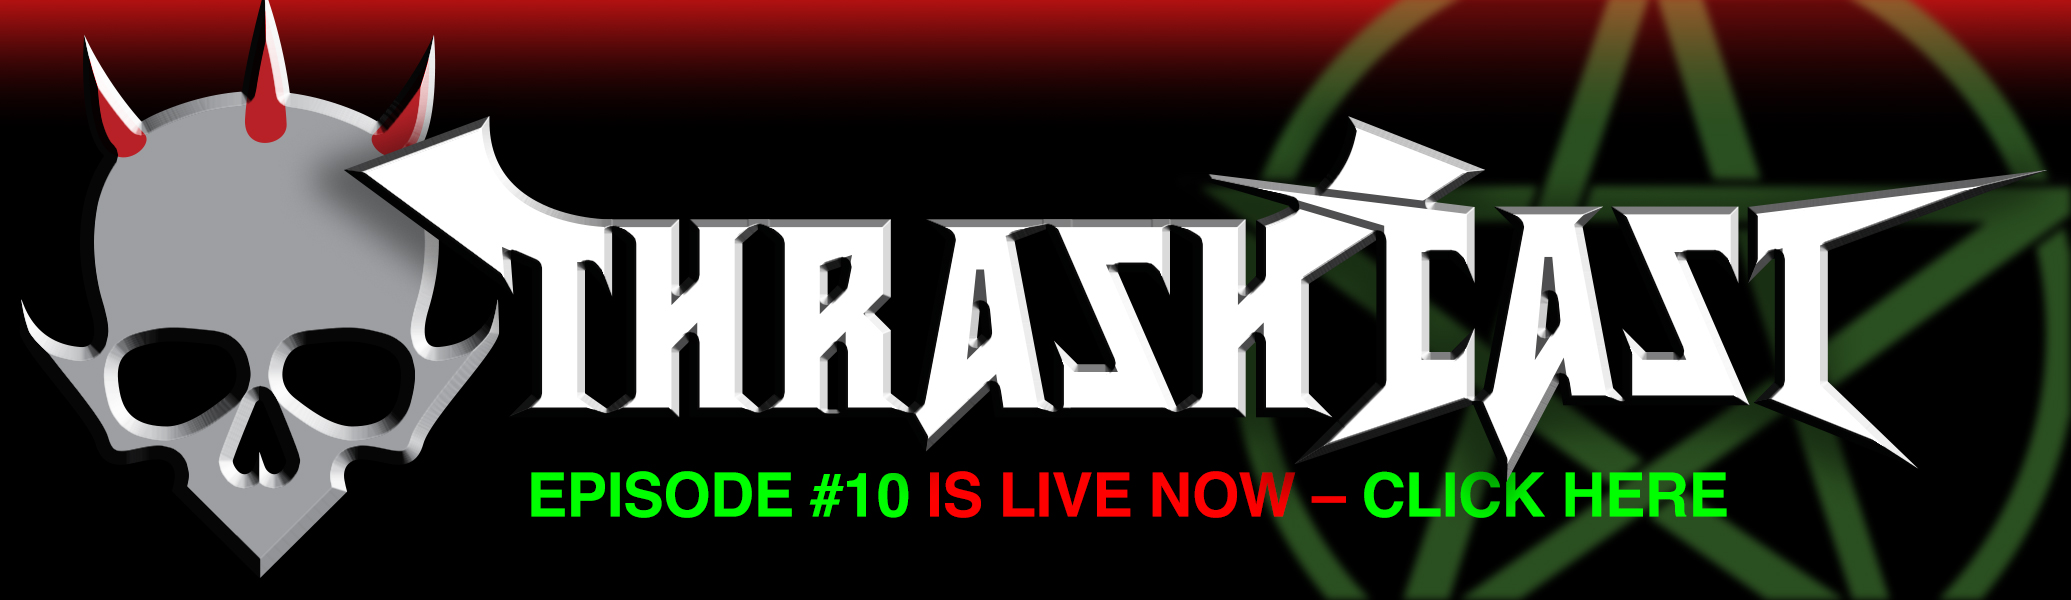 Thrashcast: Episode 9